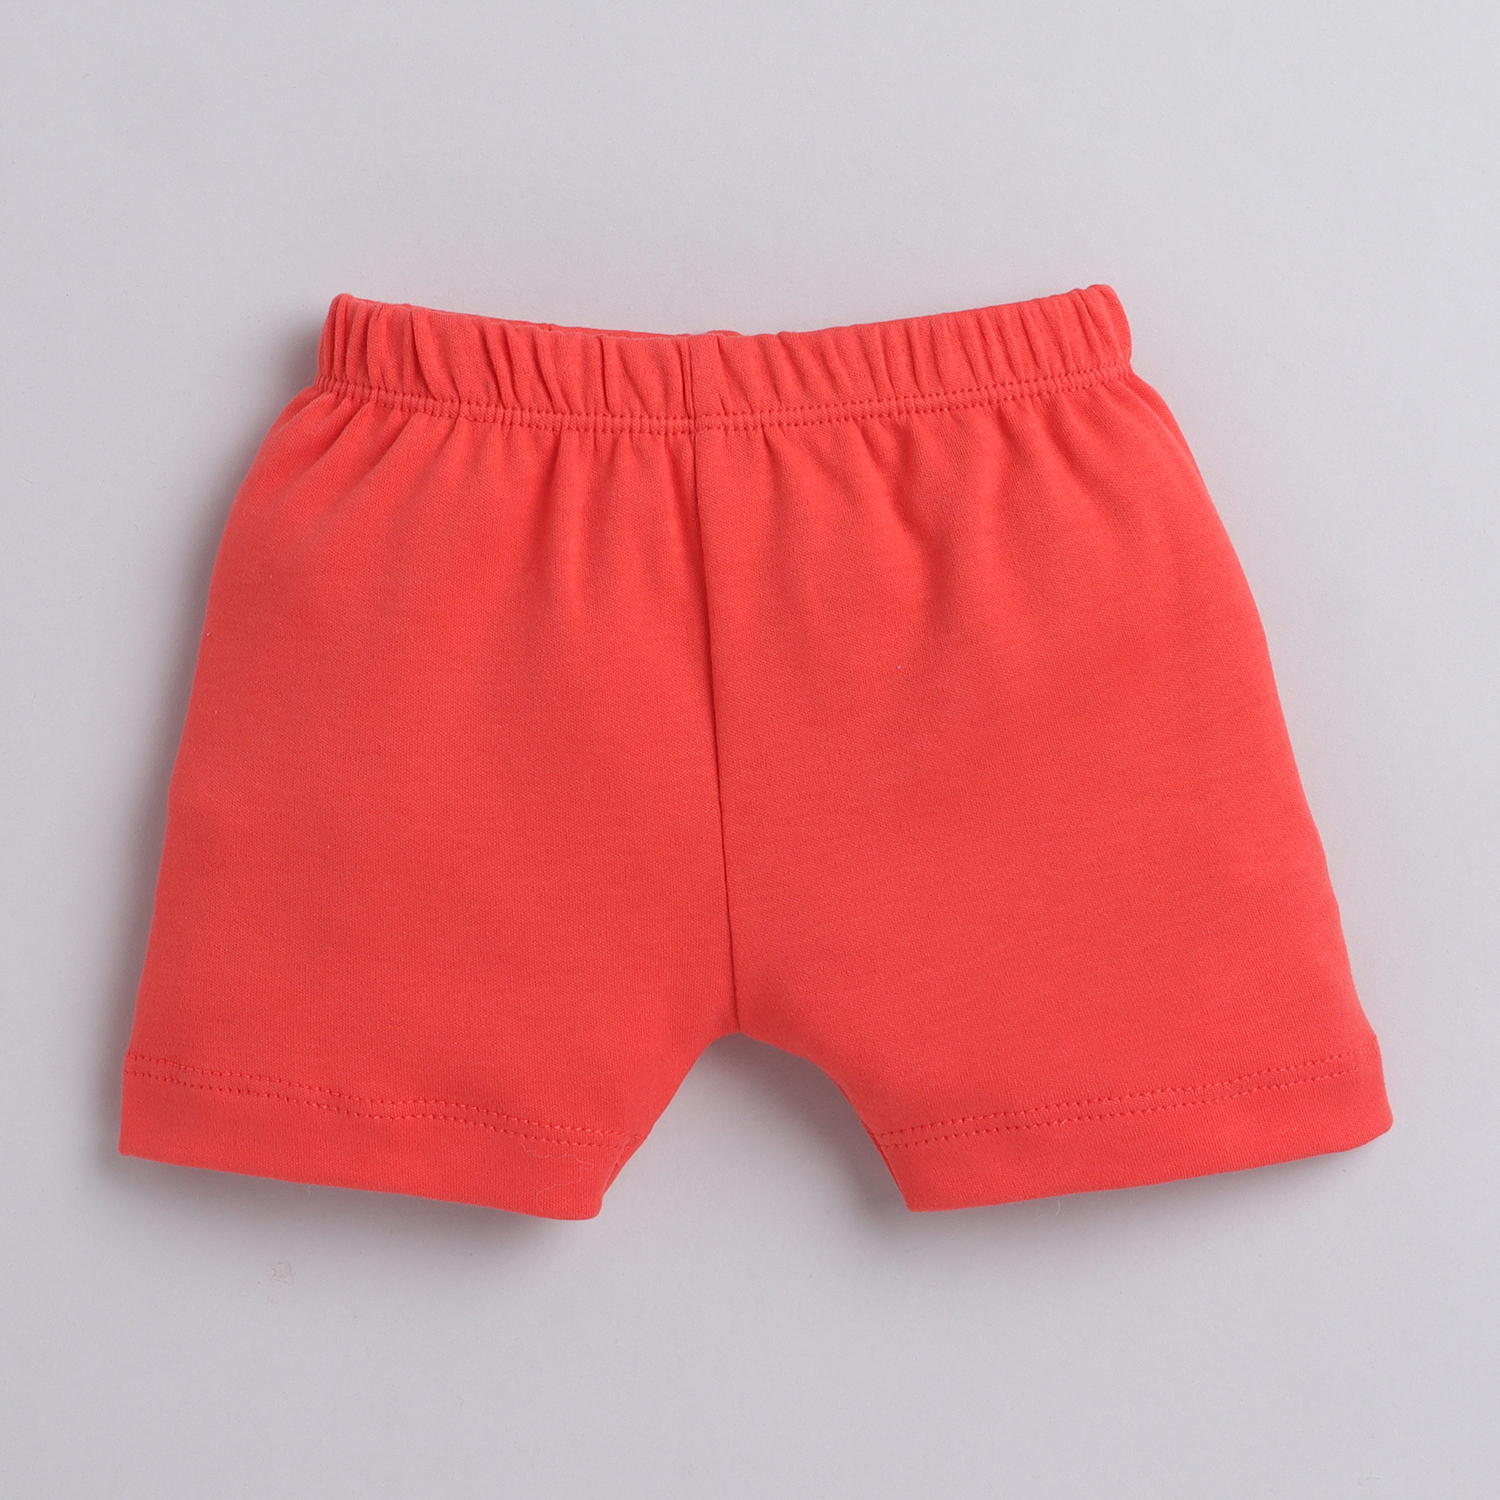 RedLuv Girls Cotton Shorts Short Pants  Hot Pants  Regular Fit  Girls  Shorts